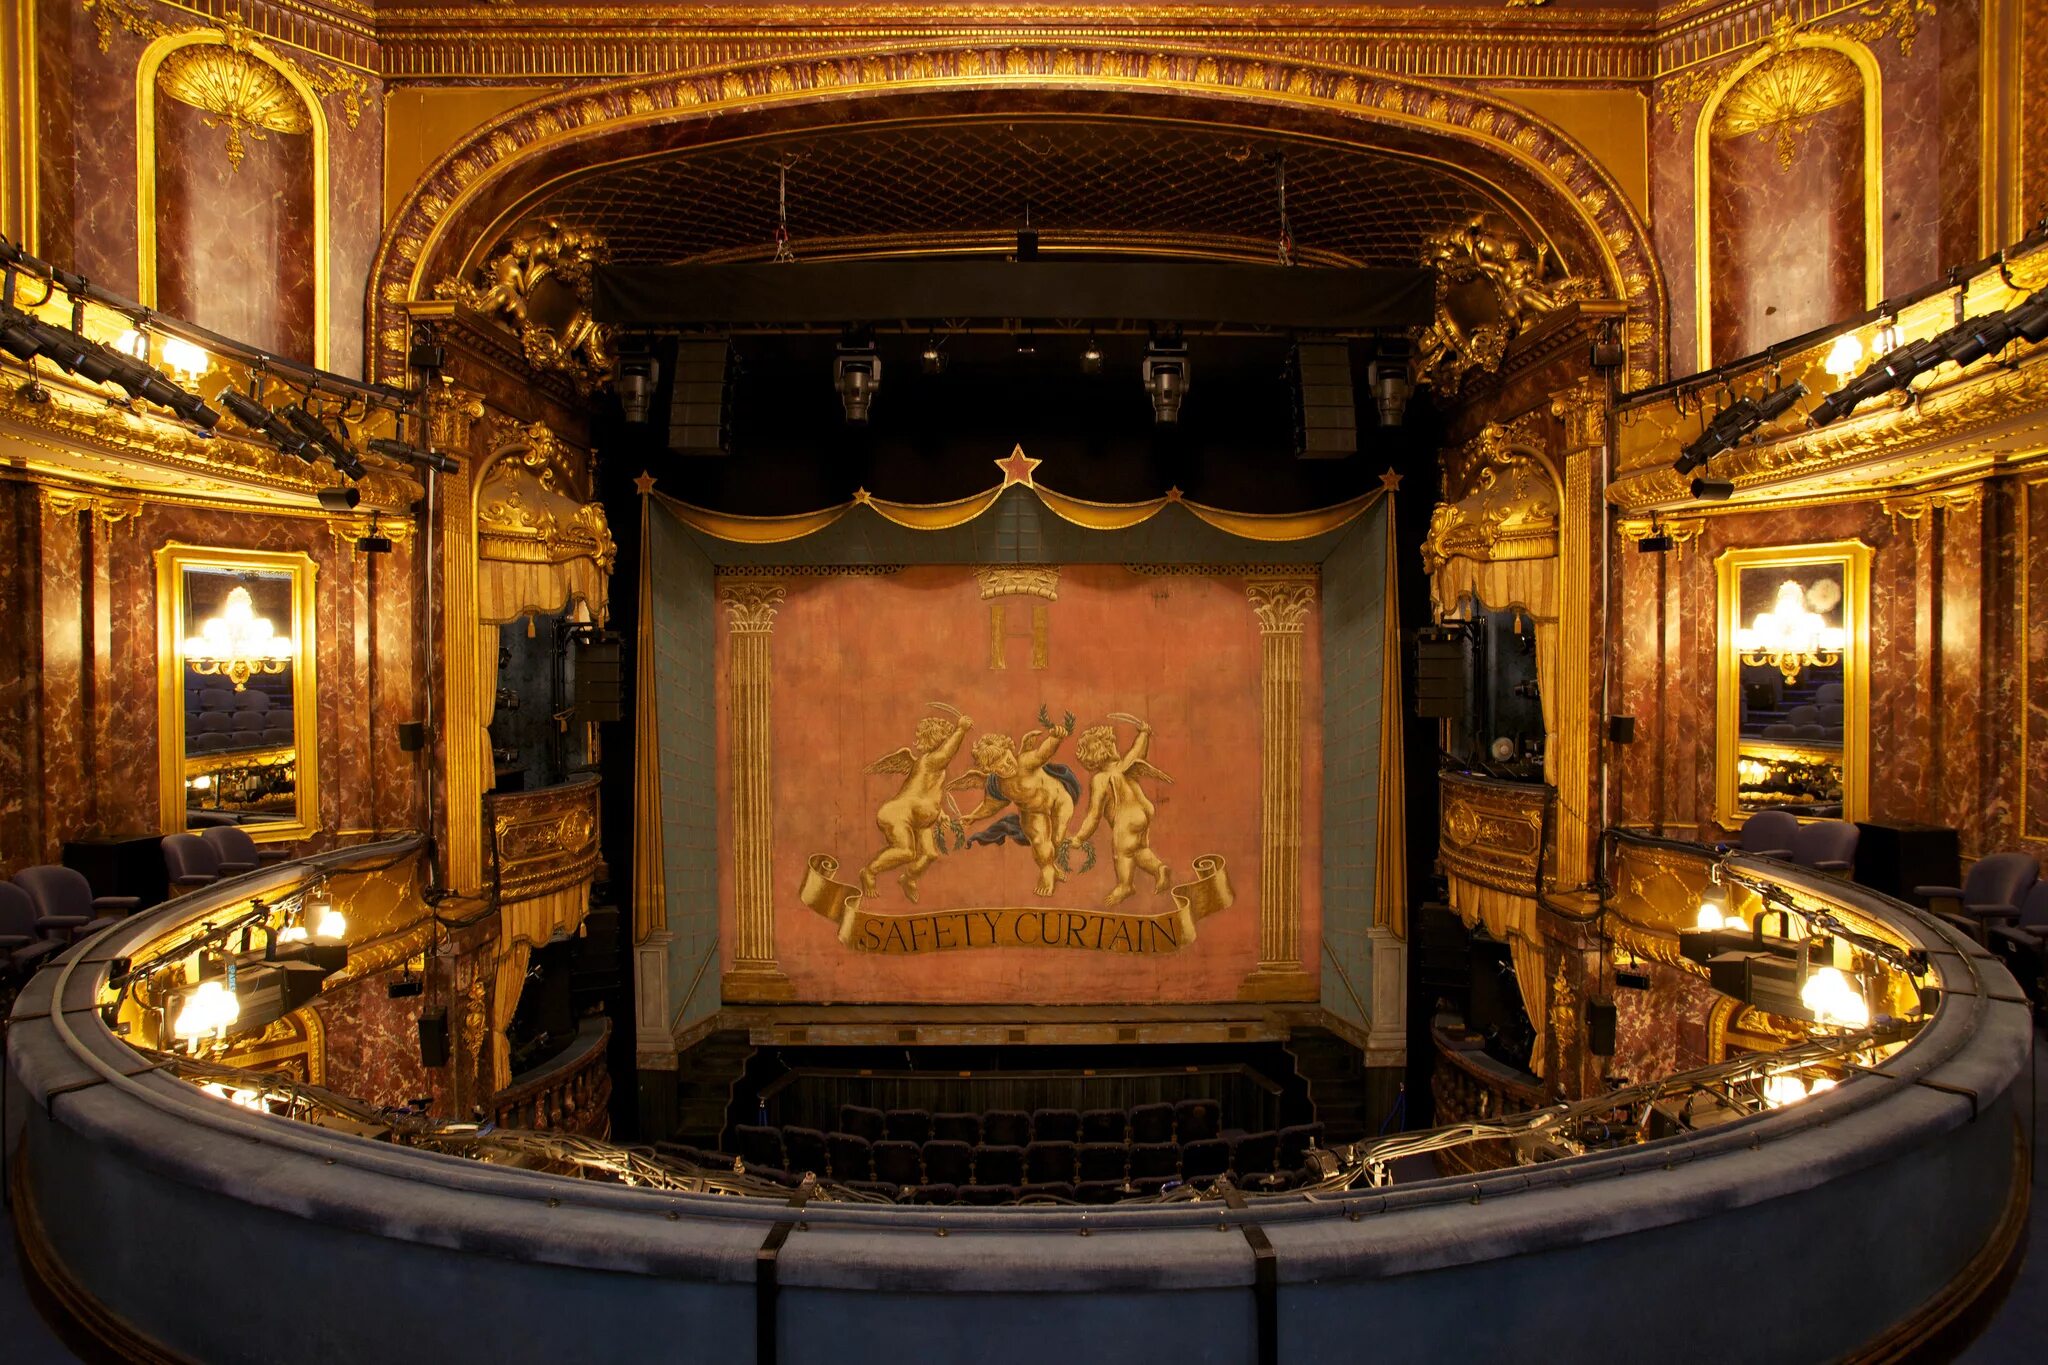 Theatre Royal Haymarket. Royal Haymarket театр. Бат Англия Королевский театр. Королевский театр Вестминстер. Theatre a lot